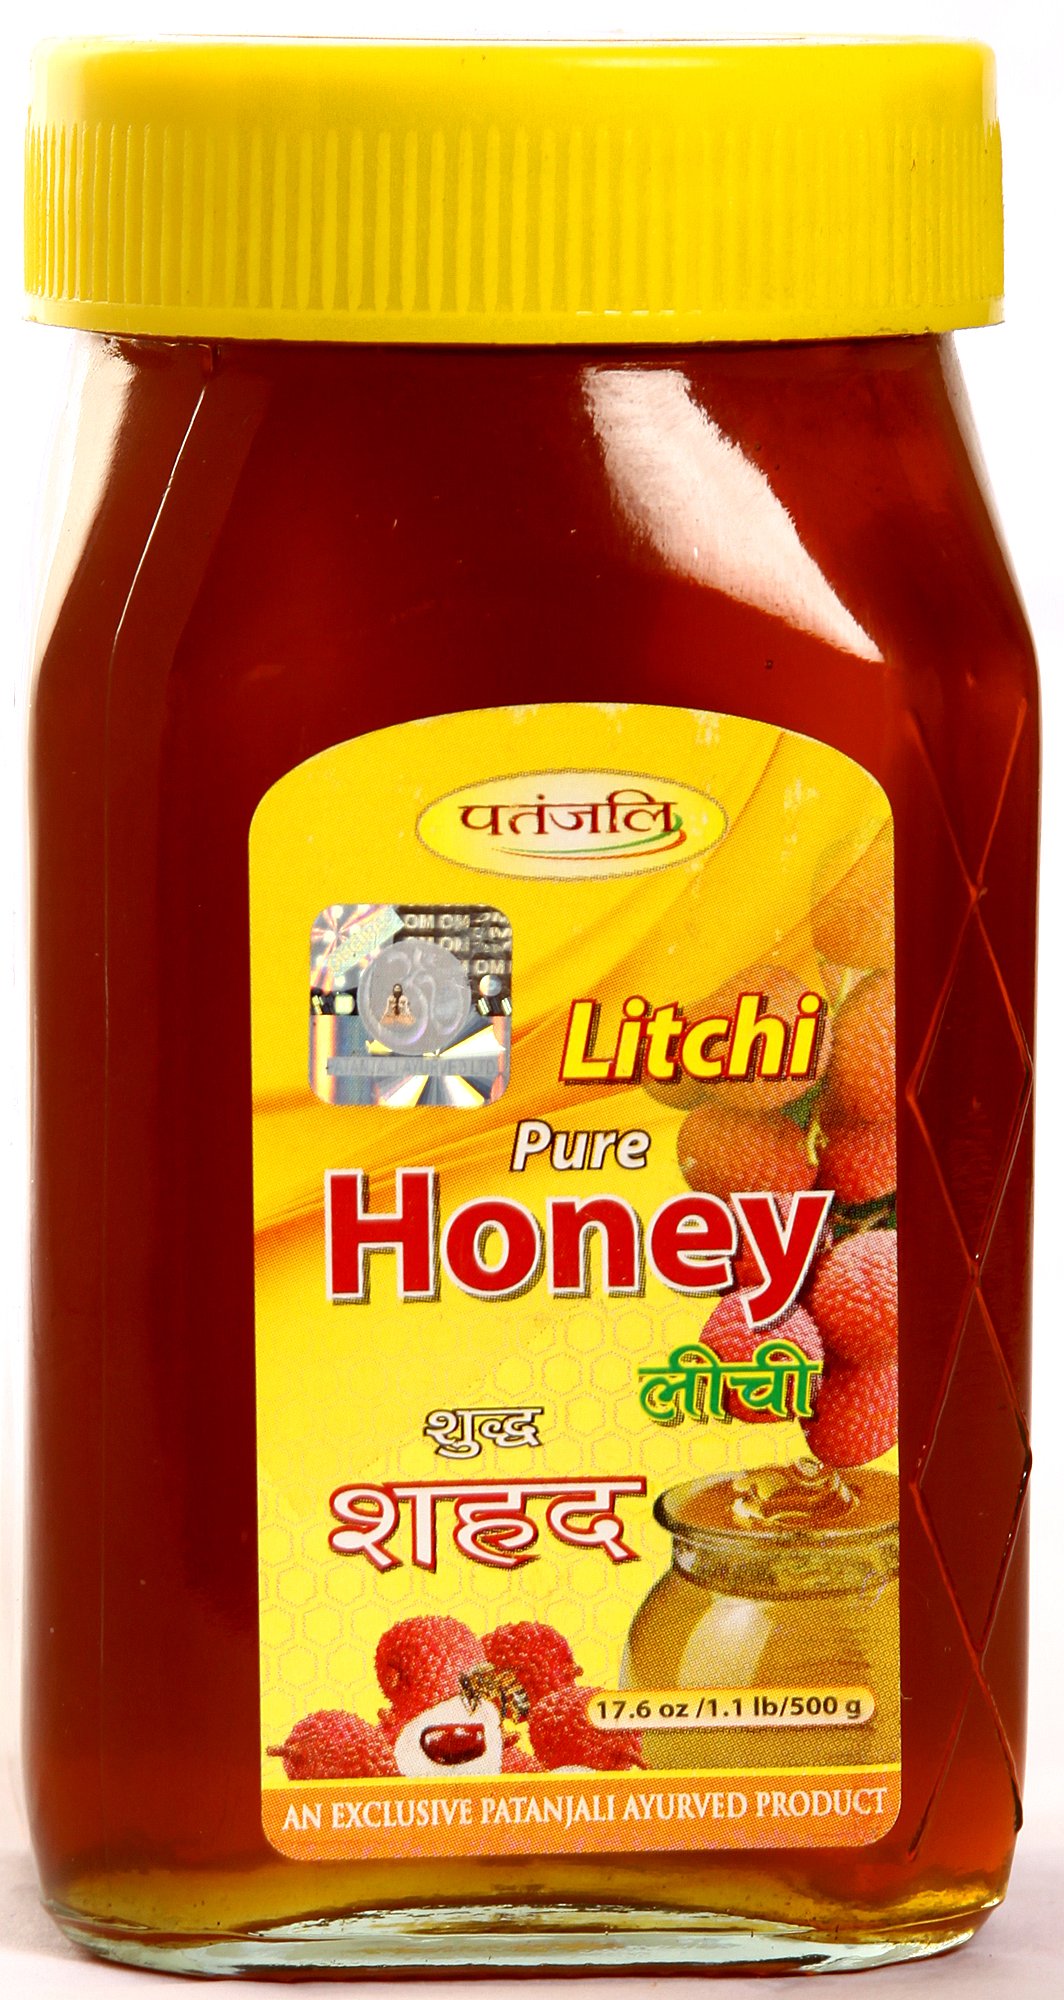 Patanjali Litchi Pure Honey - book cover